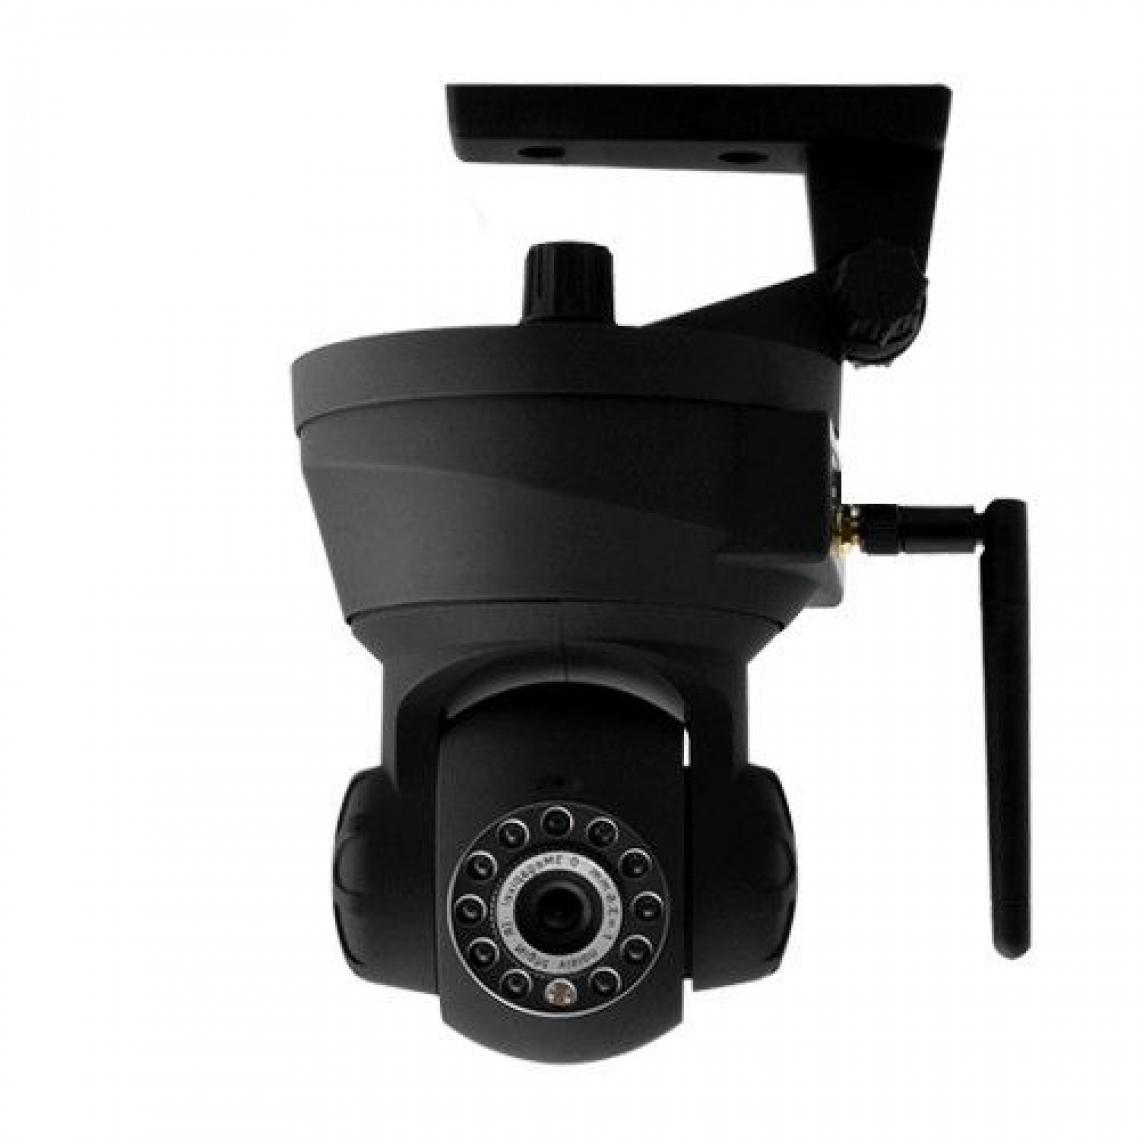 Yonis - Babycam Caméra Ip Wifi - Caméra de surveillance connectée